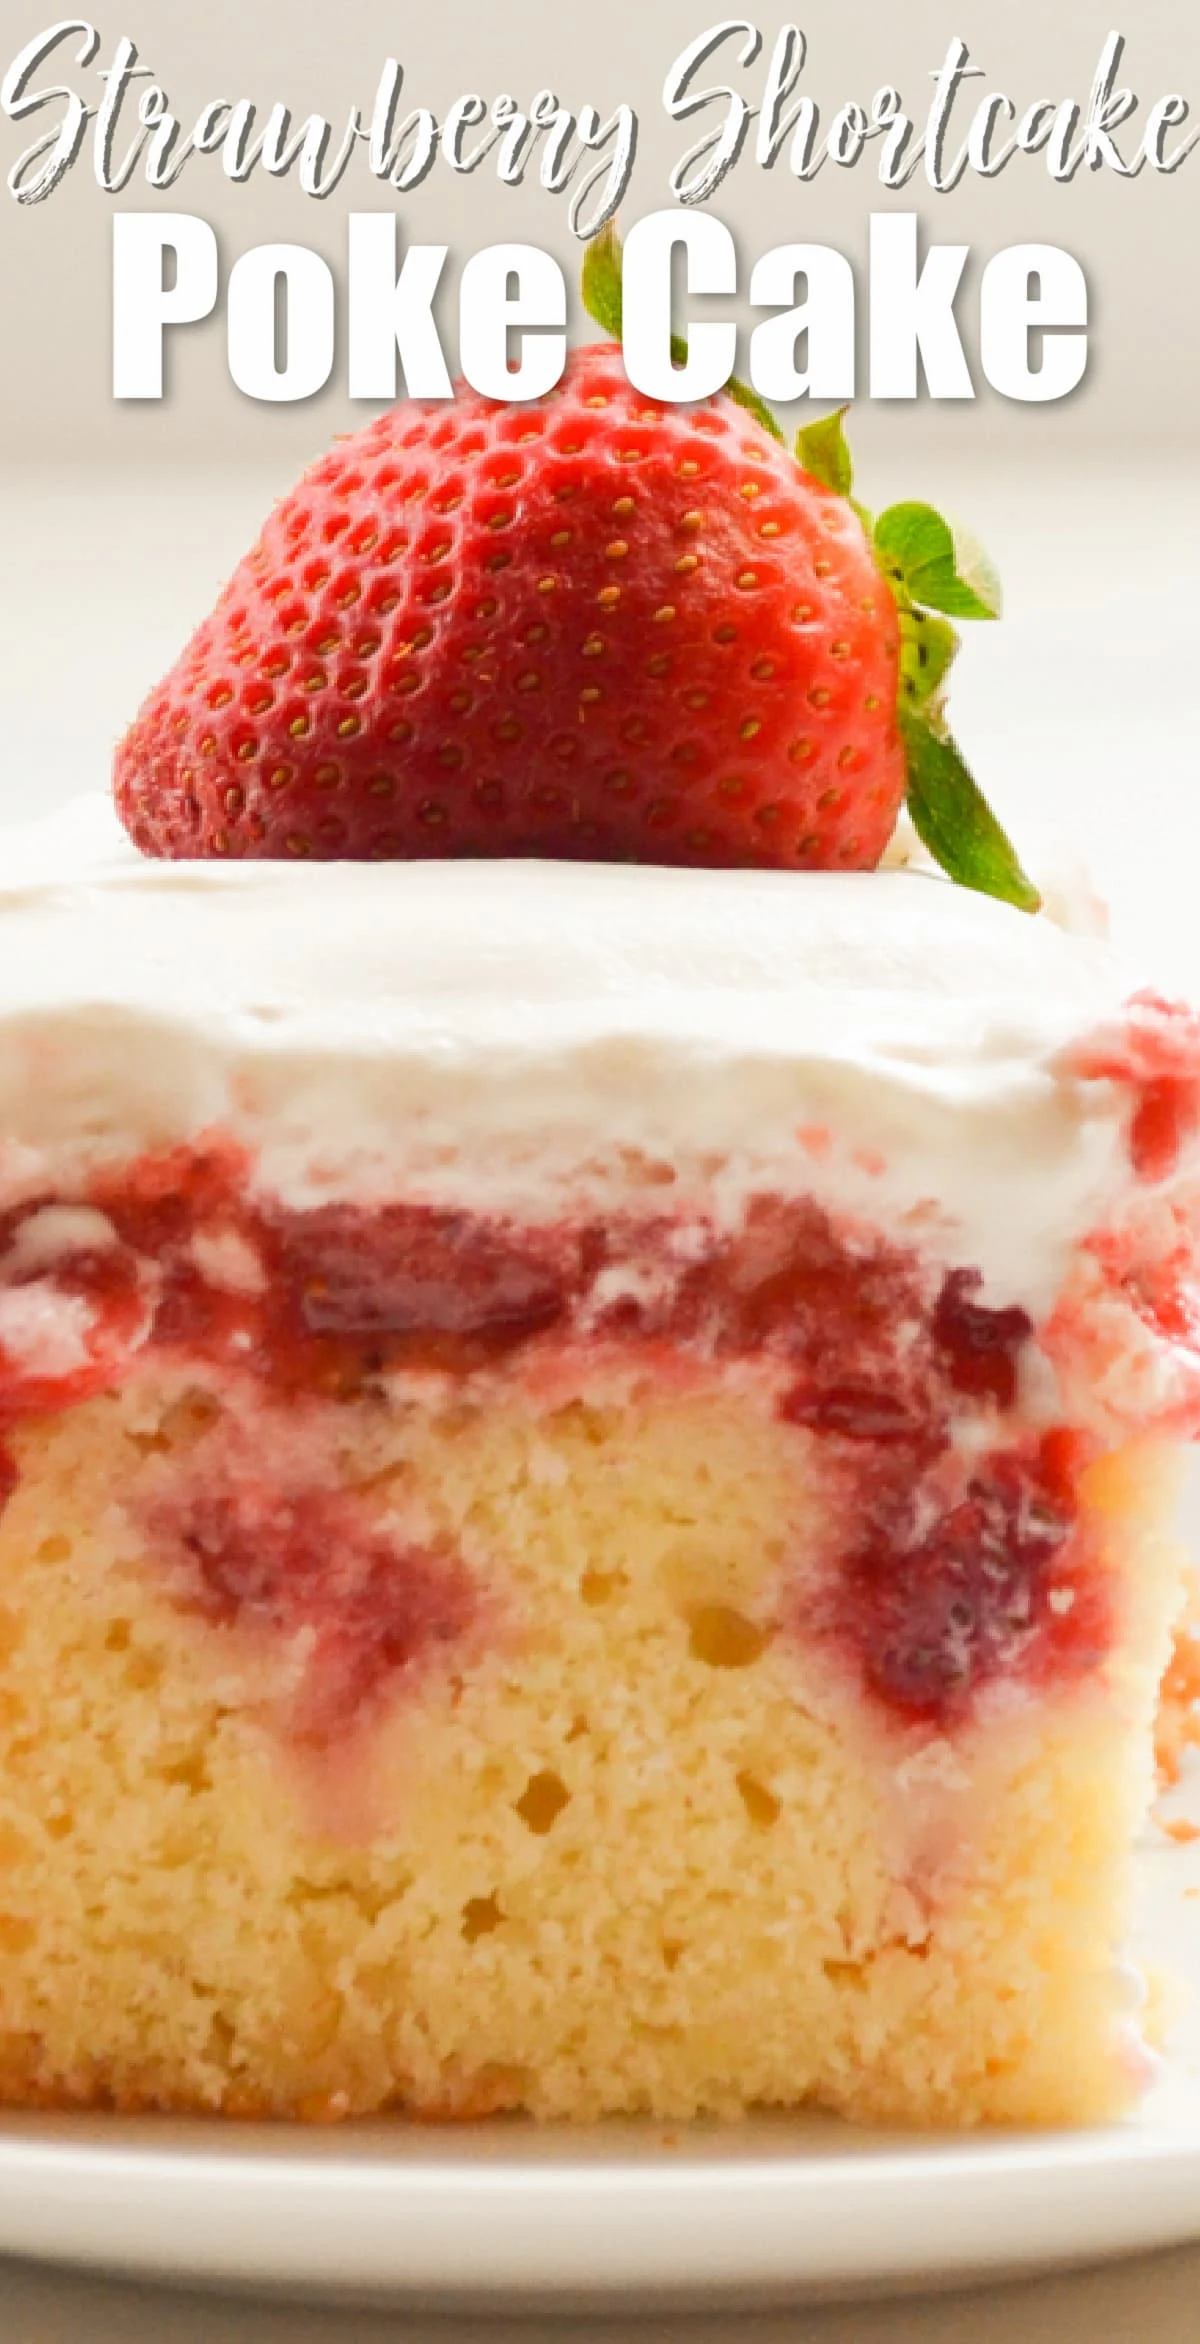 A slice of Strawberry Shortcake Poke Cake with white text at top Strawberry Shortcake Poke Cake.